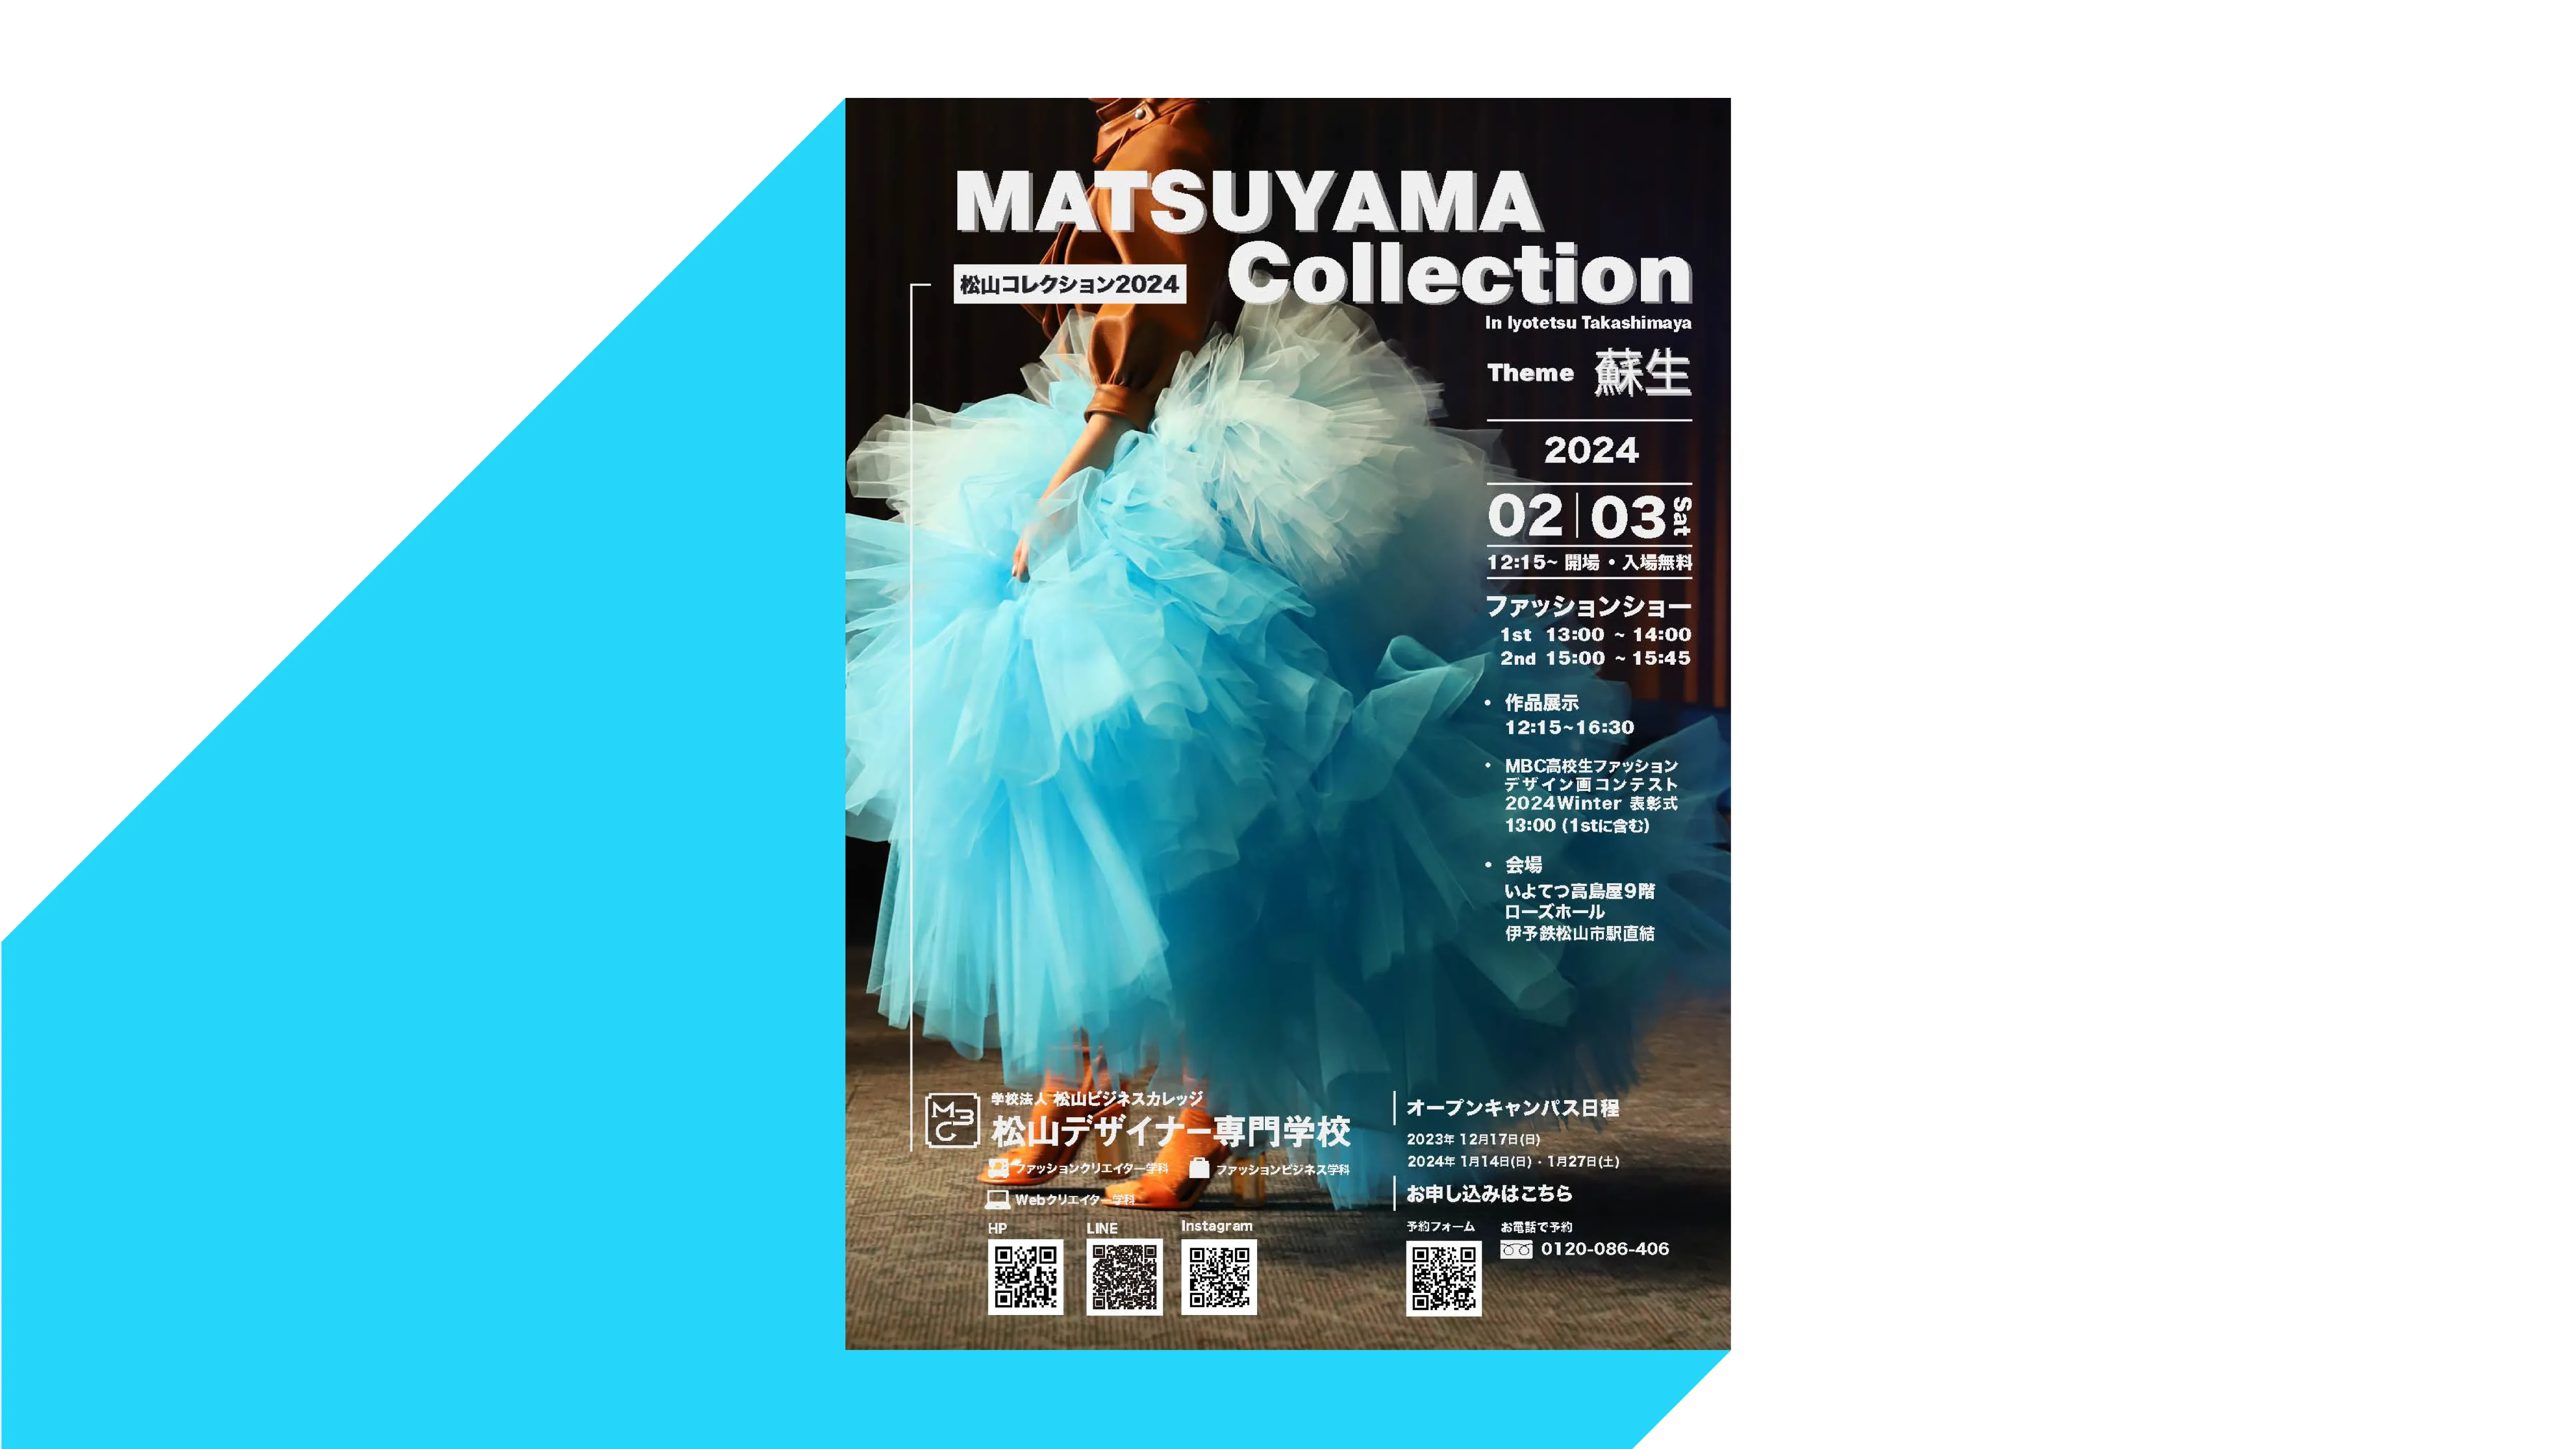 MATSUYAMA Collection 2024 flyer